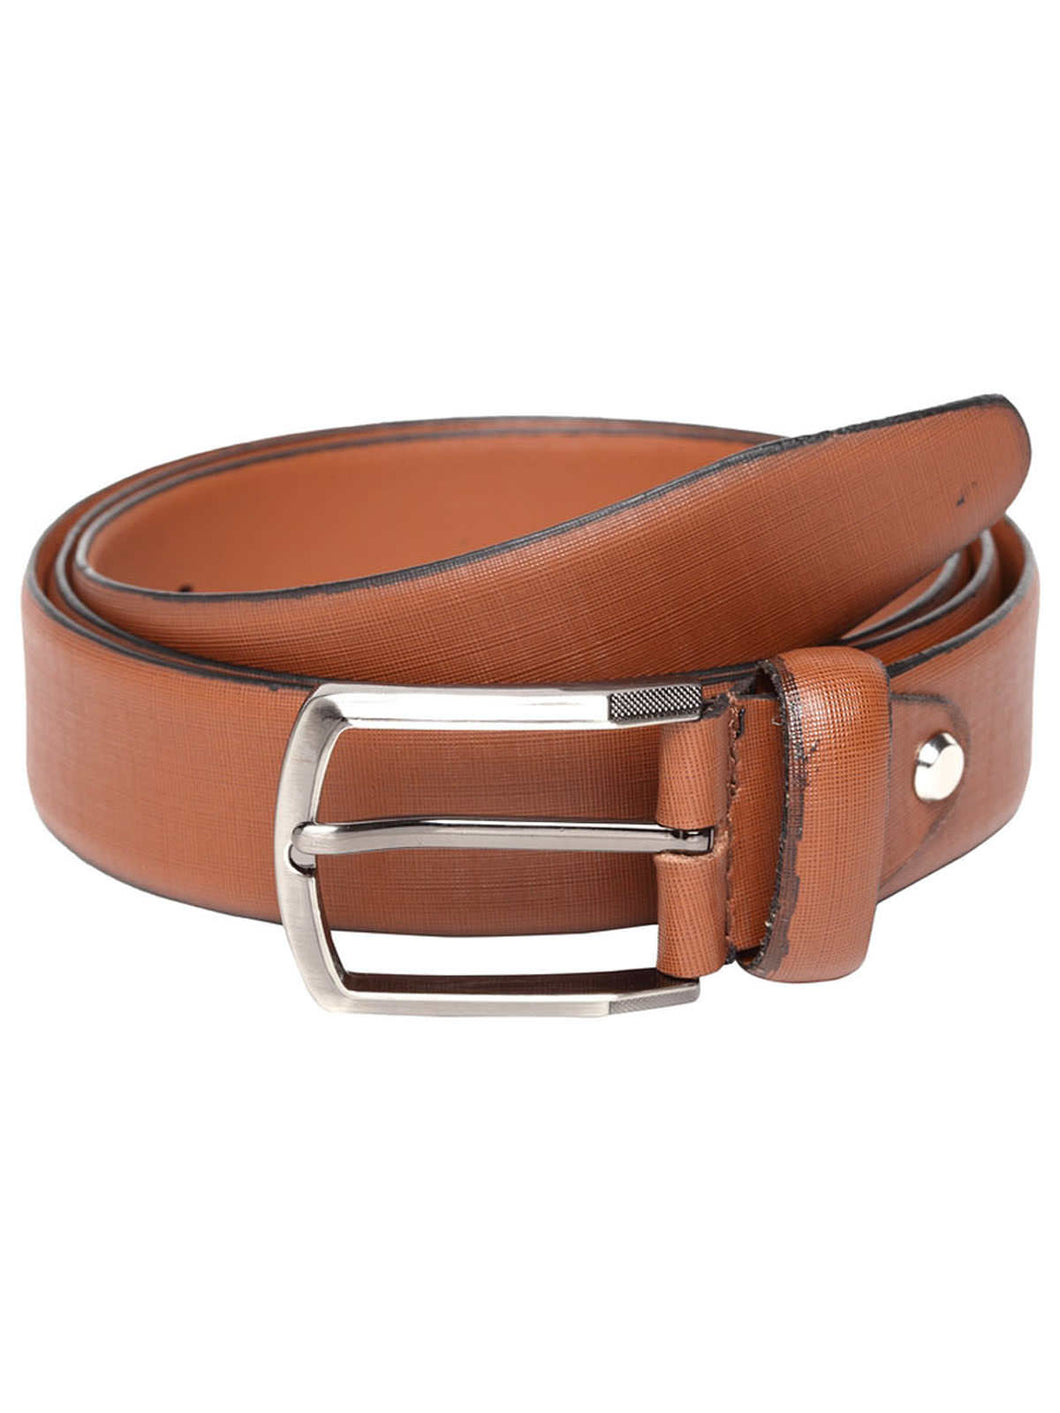 Teakwood Genuine Leather Tan Belts